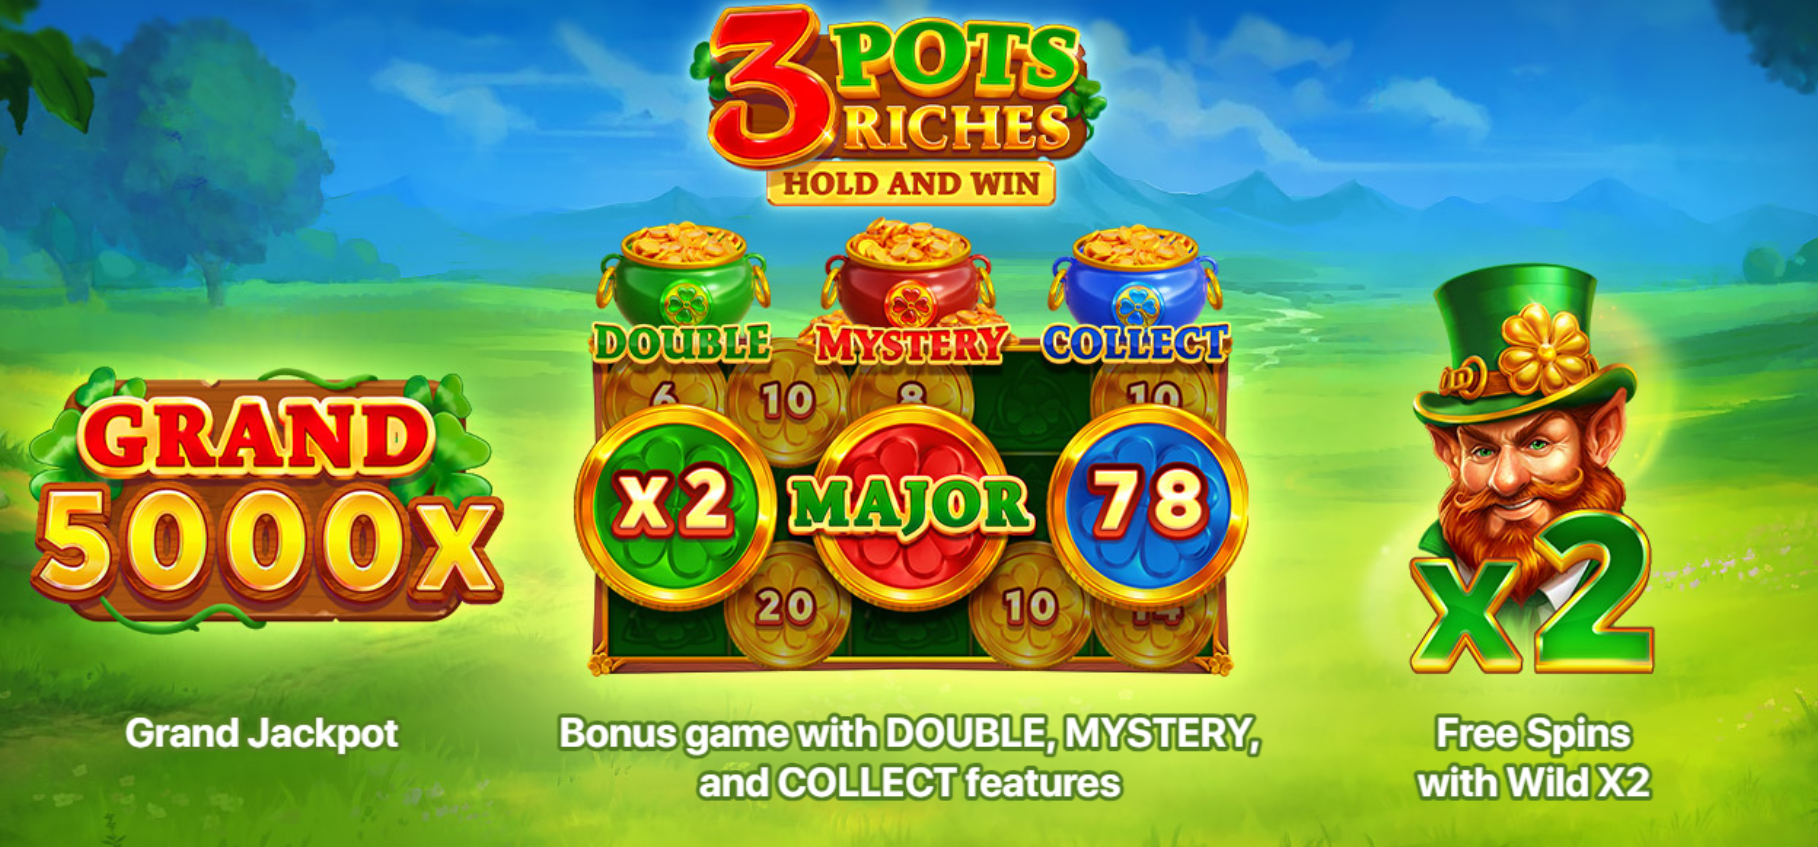 3 pots riches hold and win bonus symbols